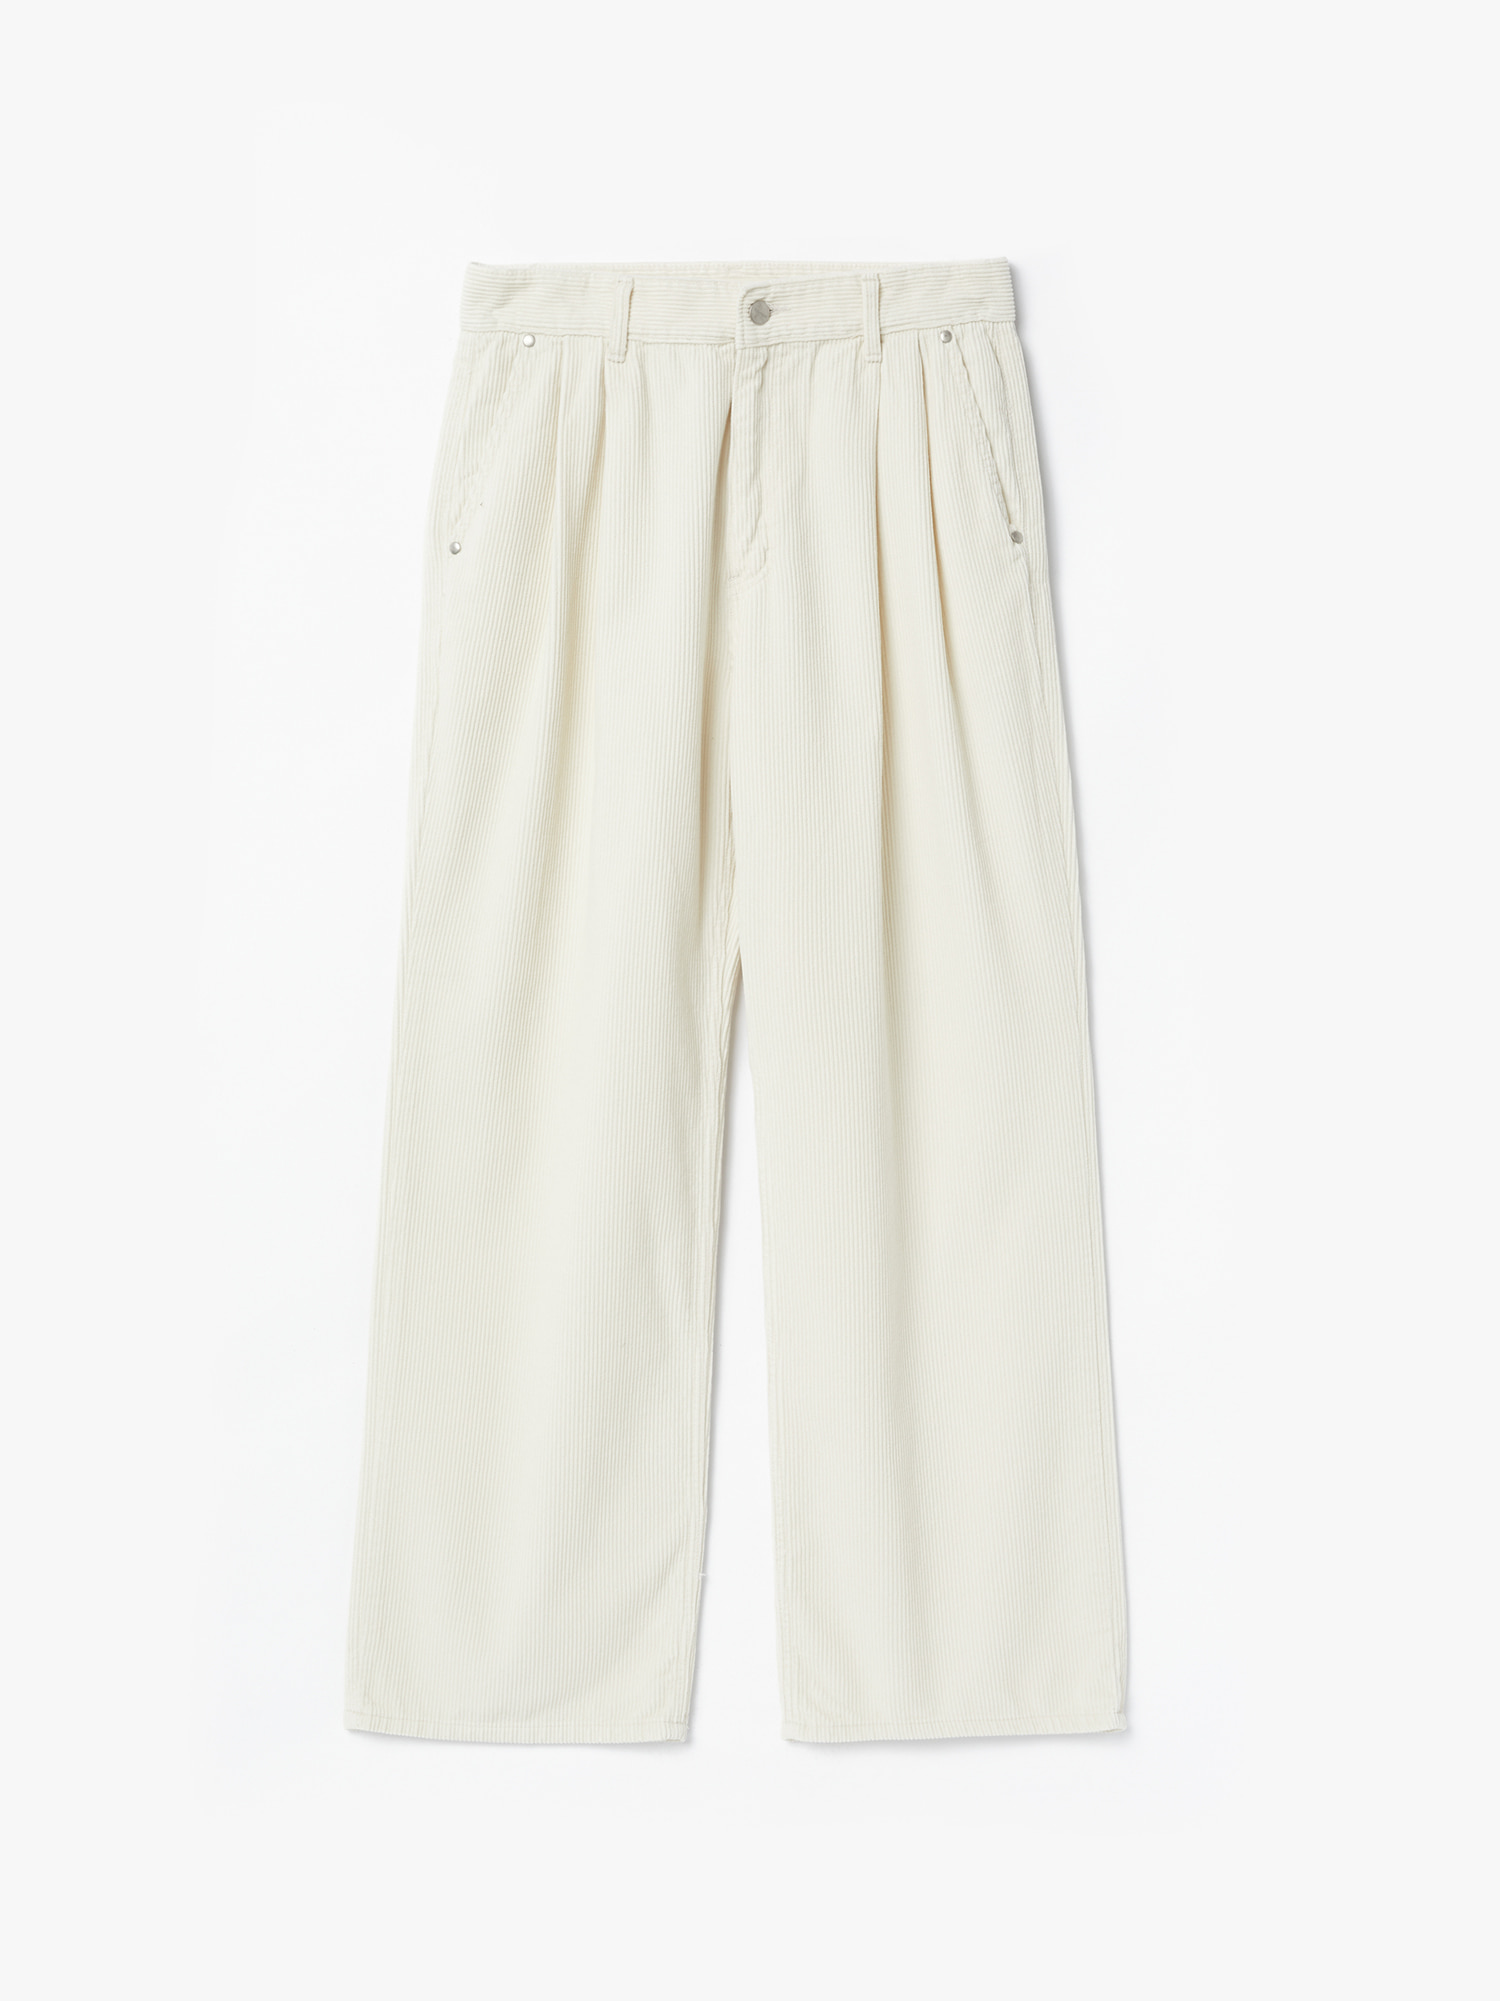 8W Corduroy Two-Tuck Pants (Cream)